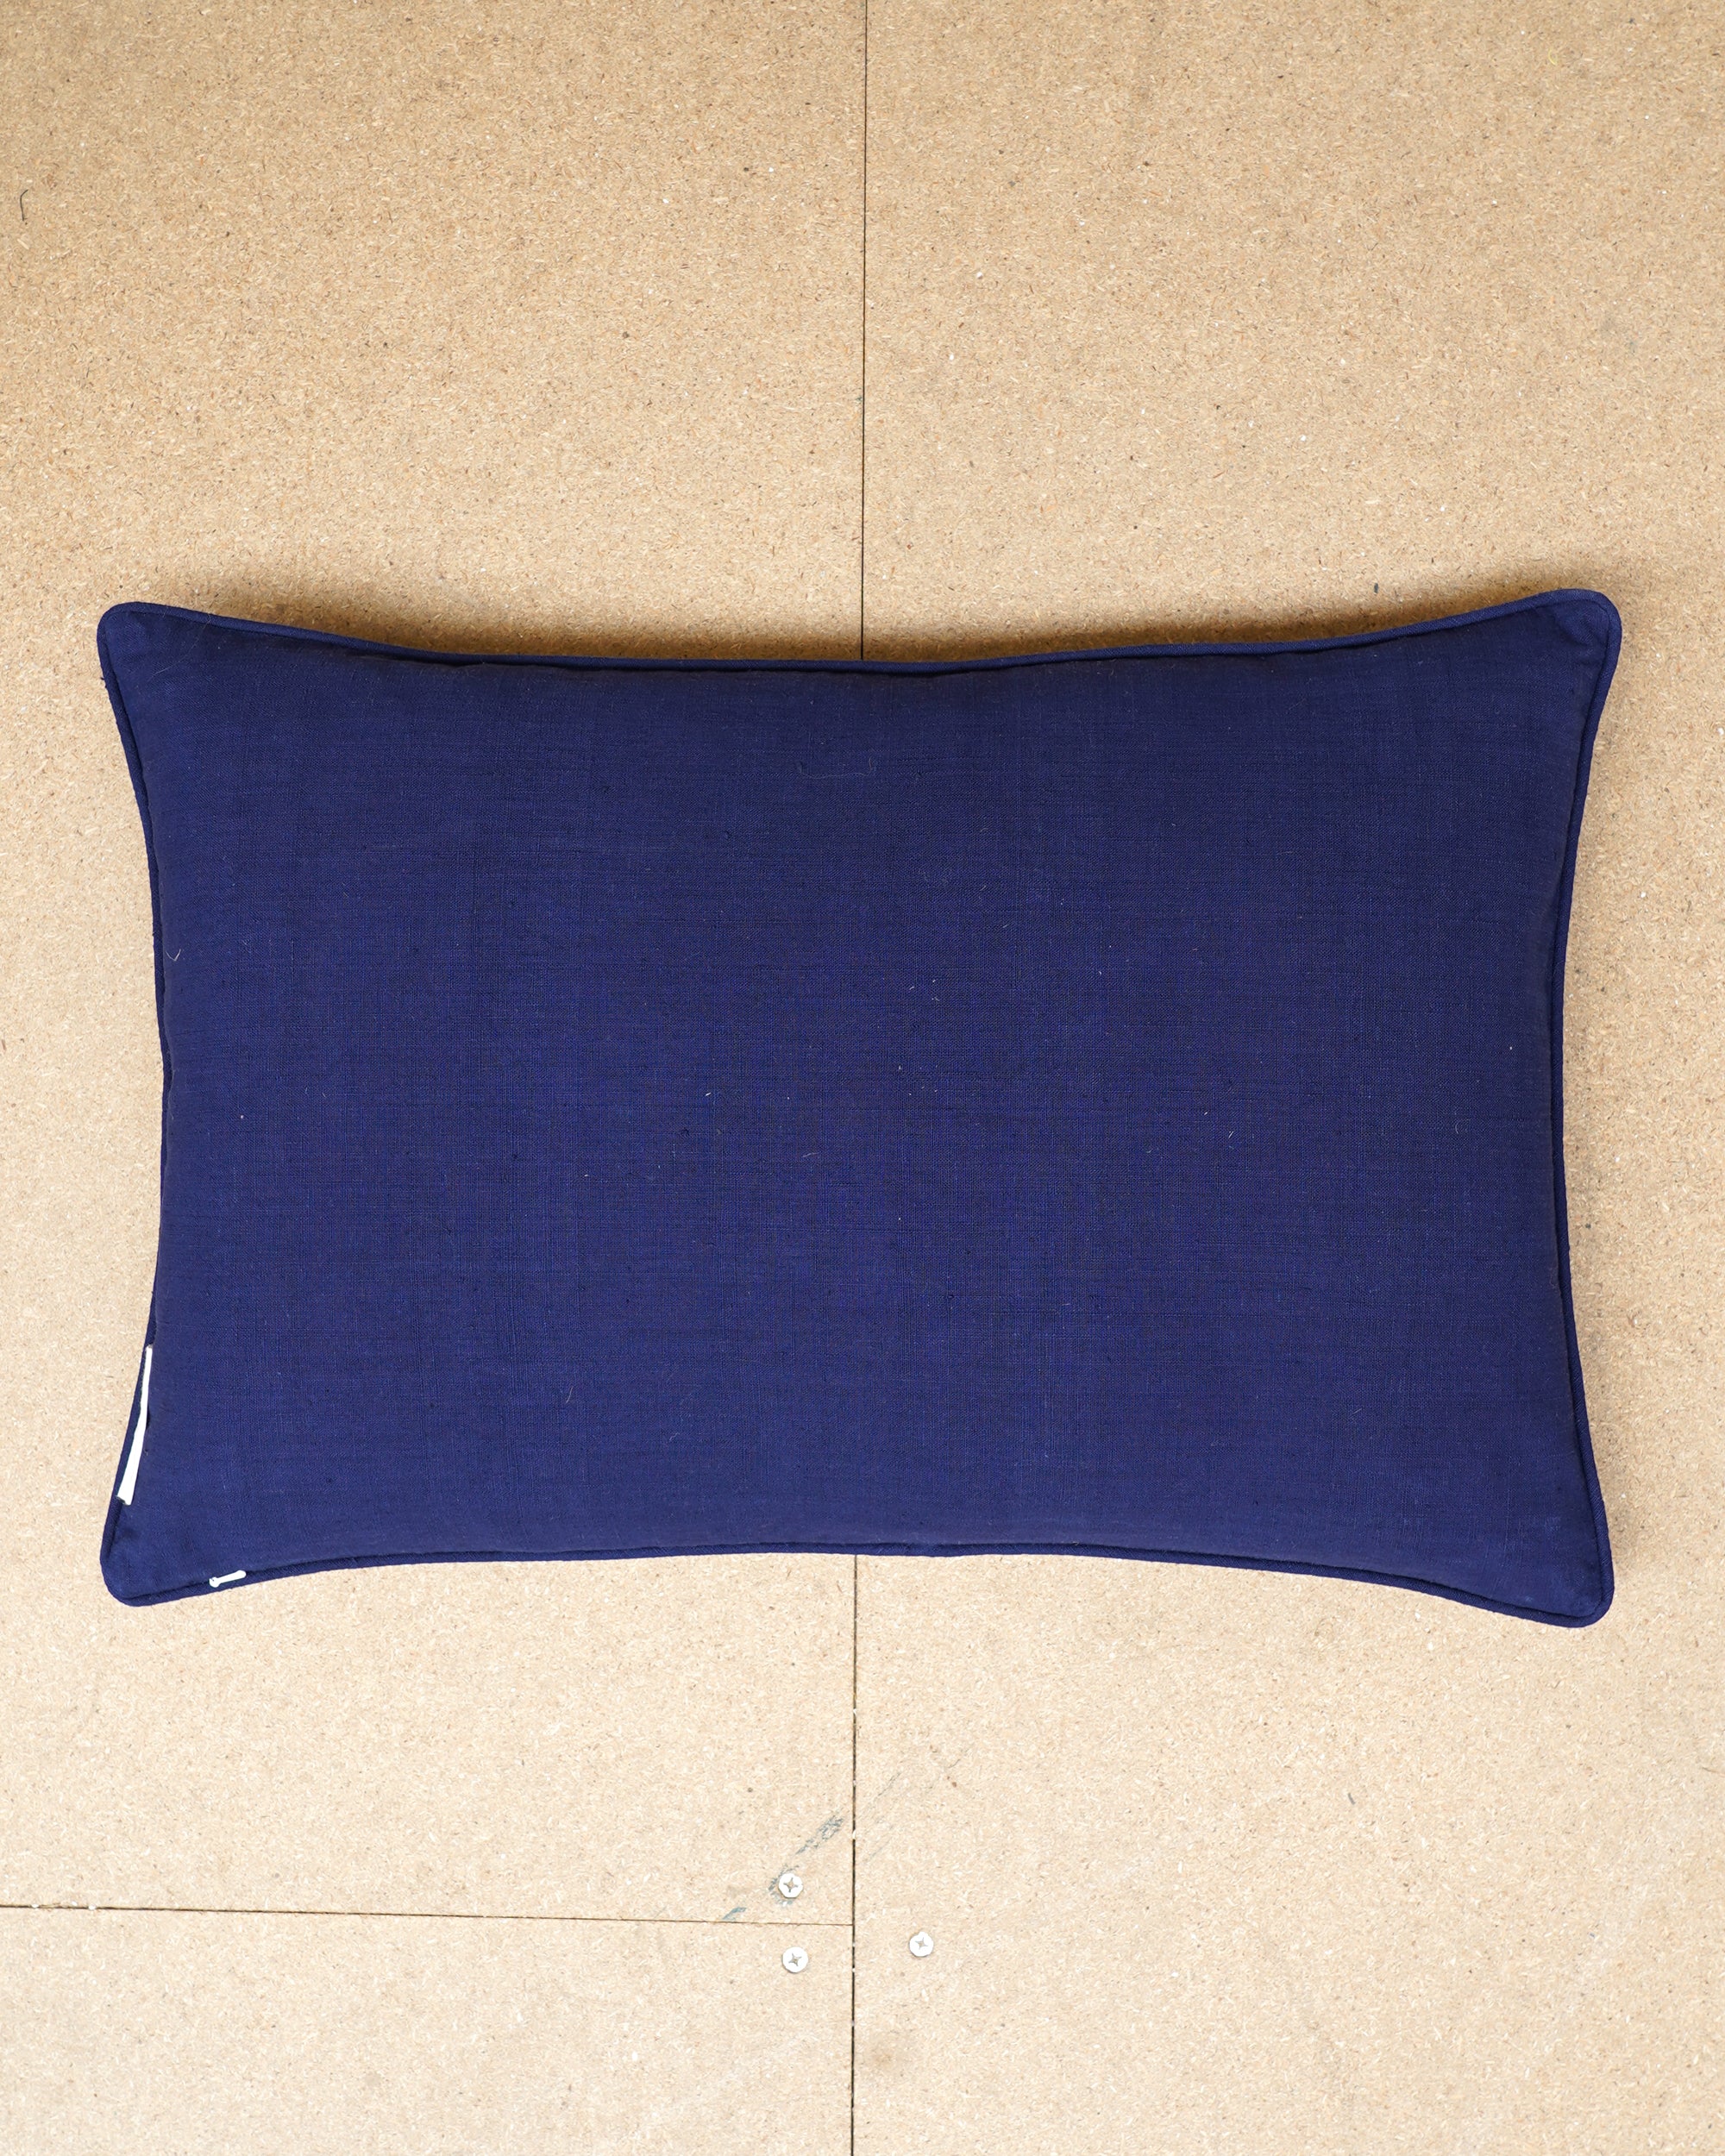 Limited Edition 20th Century Indigo Check Cushion - Blue